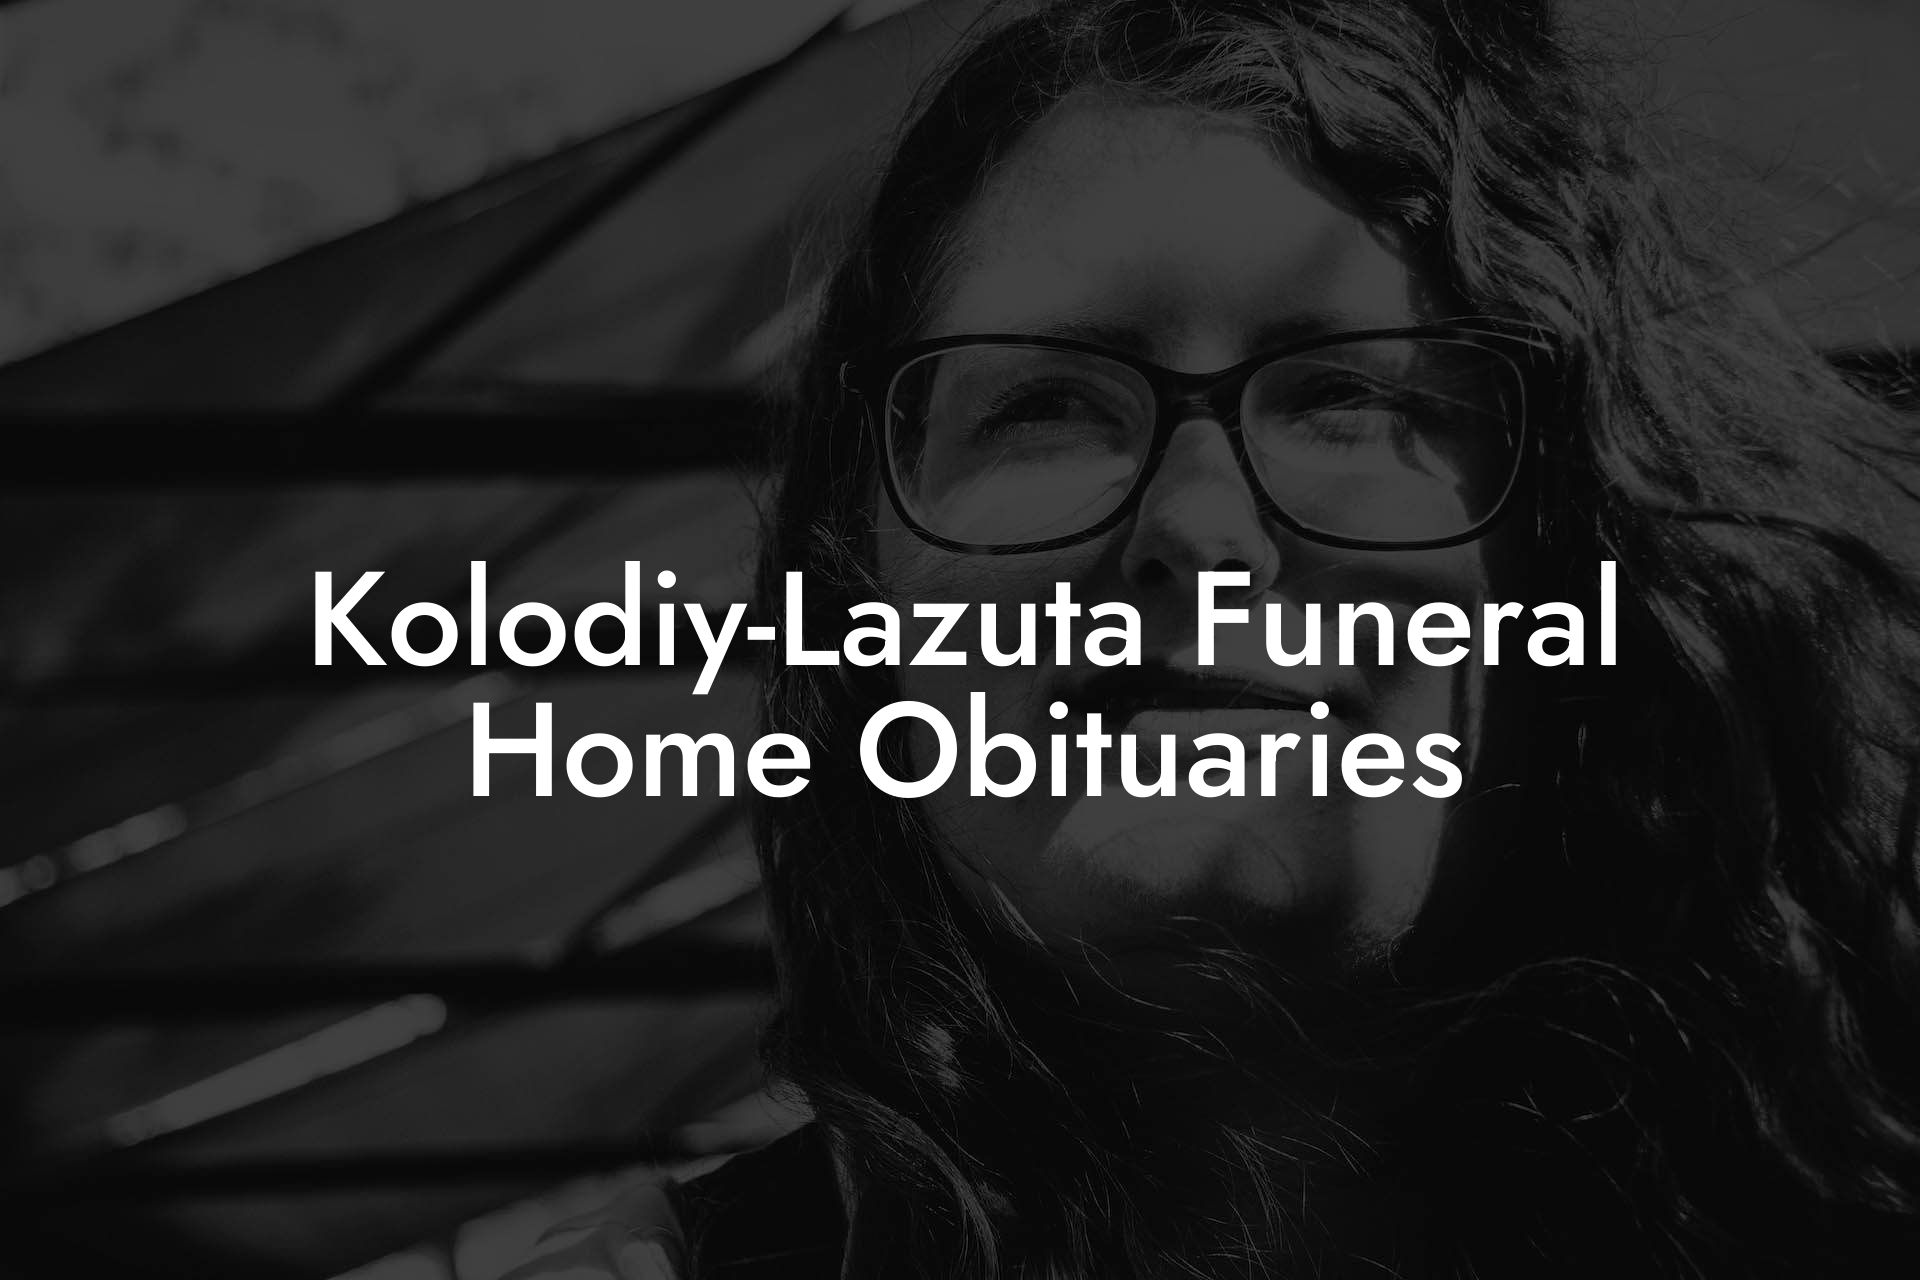 Kolodiy-Lazuta Funeral Home Obituaries